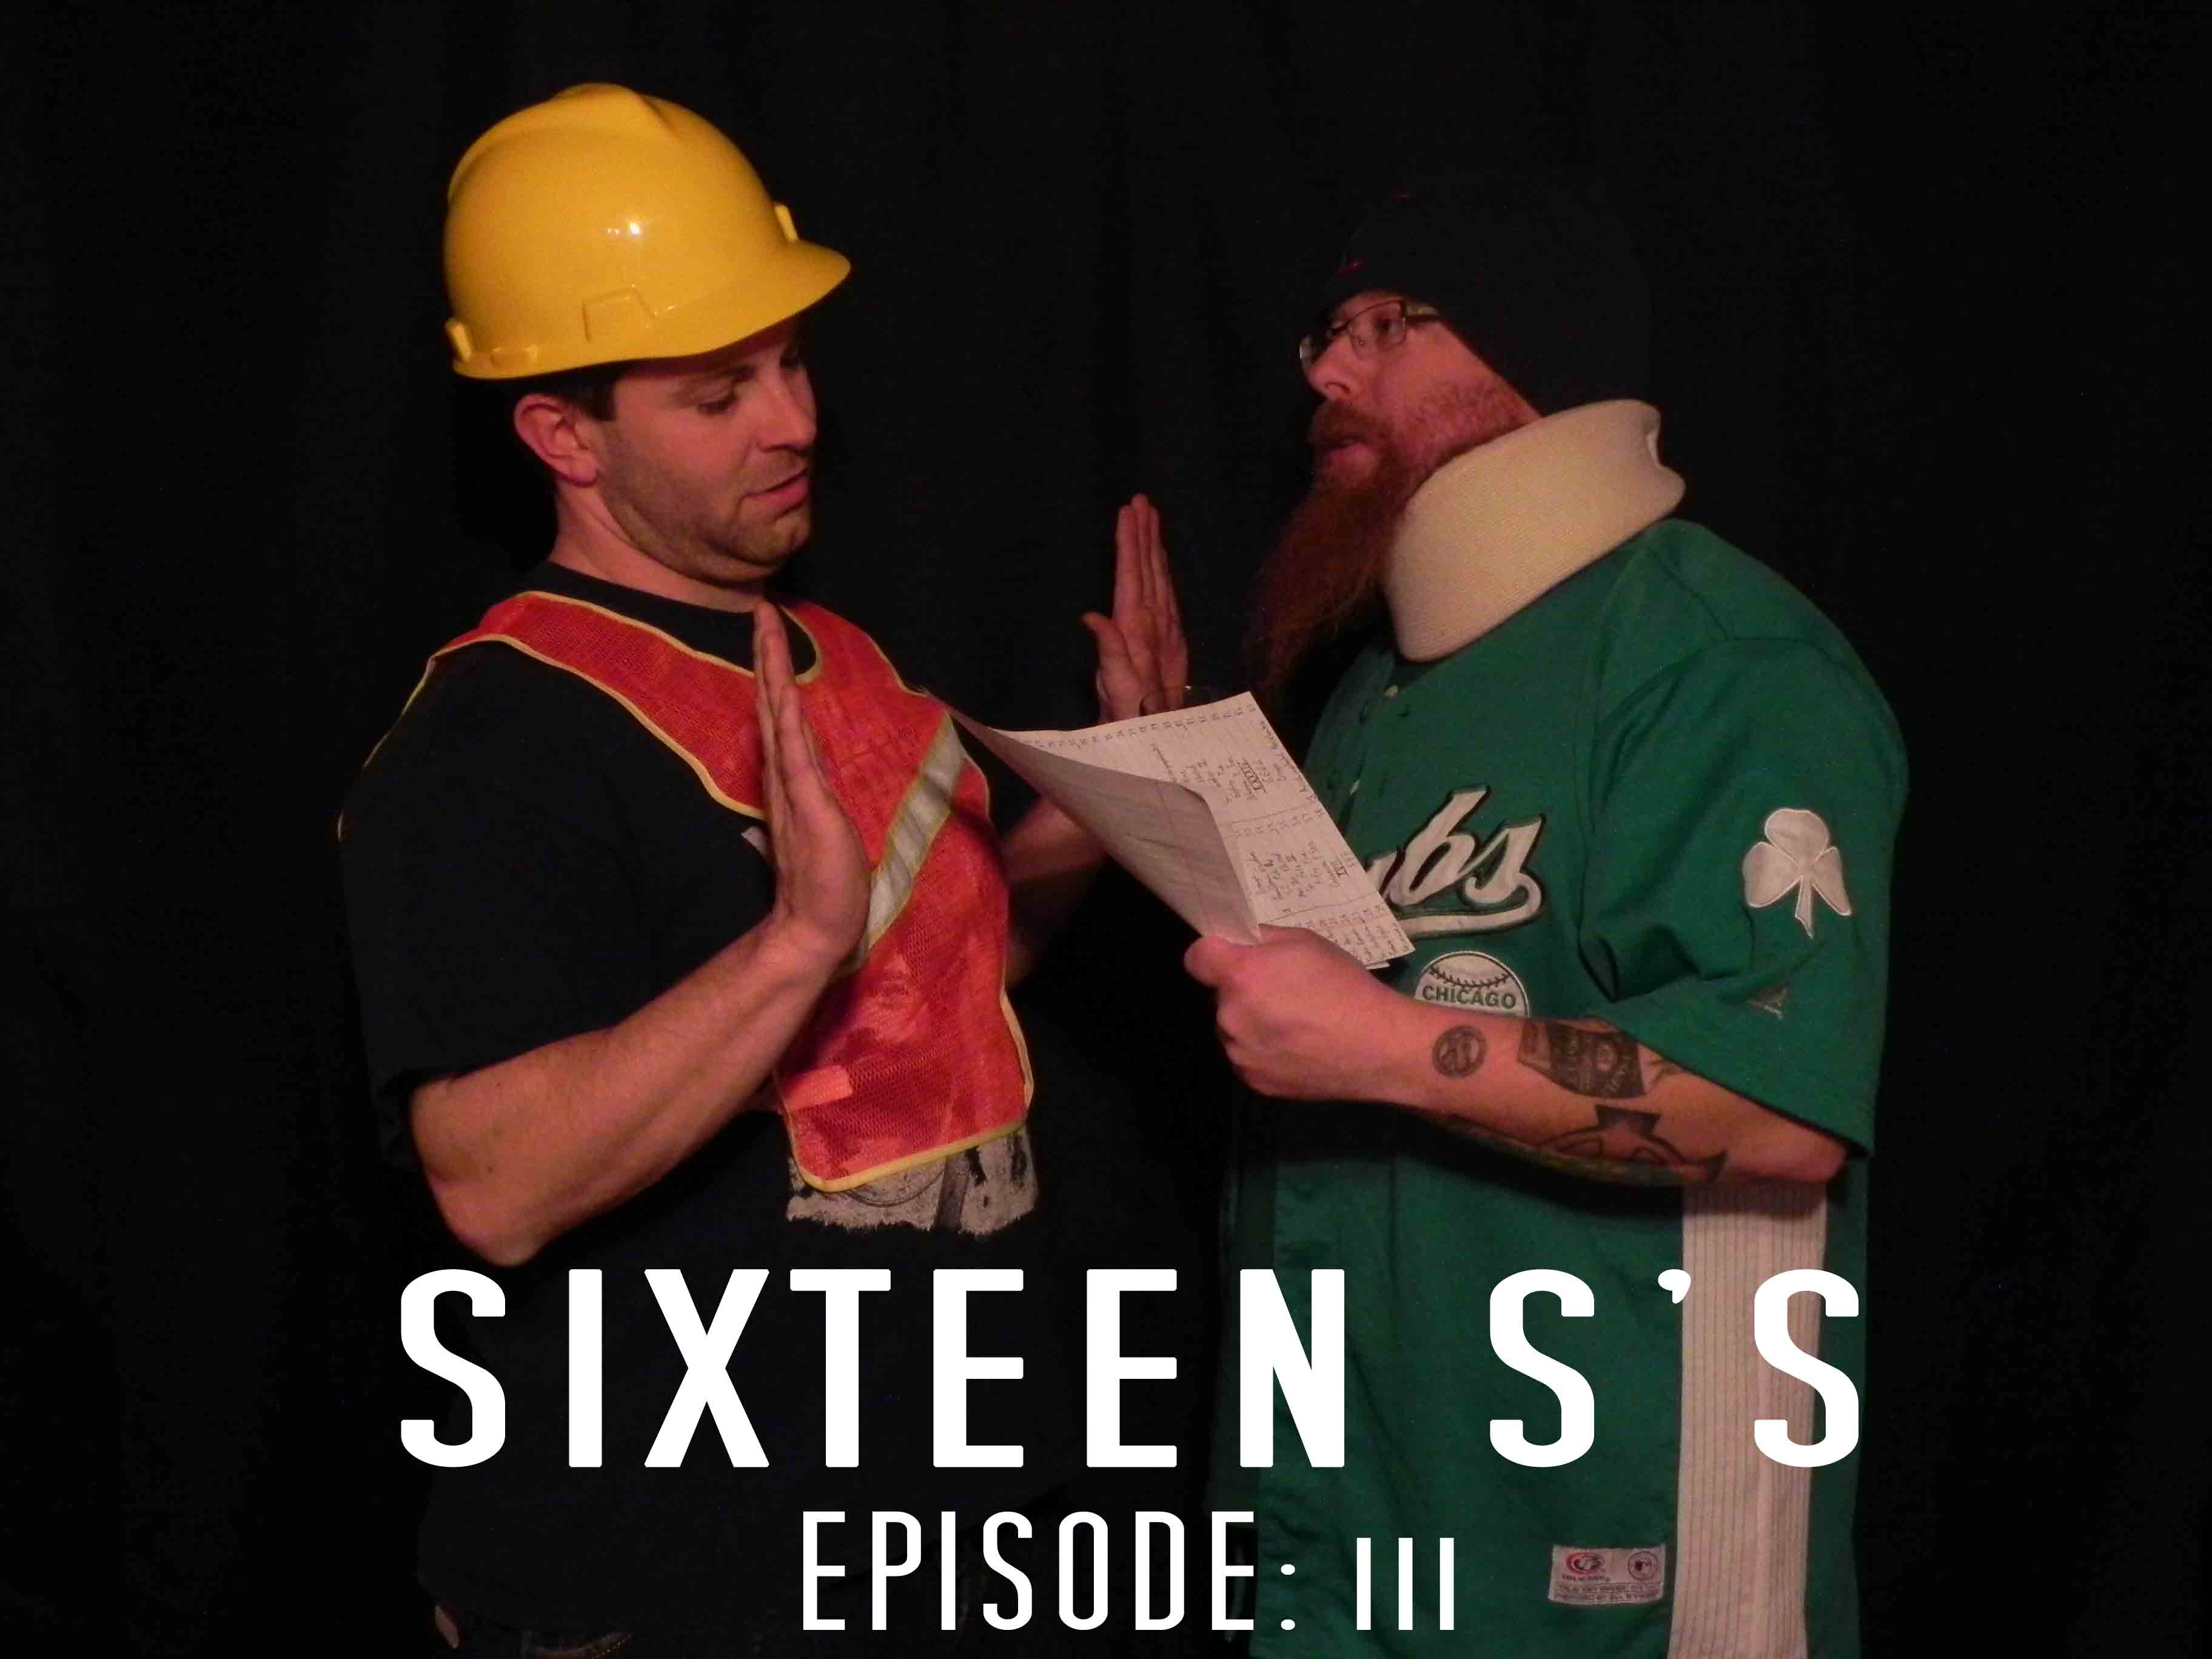 Sixteen S’s (Episode III)